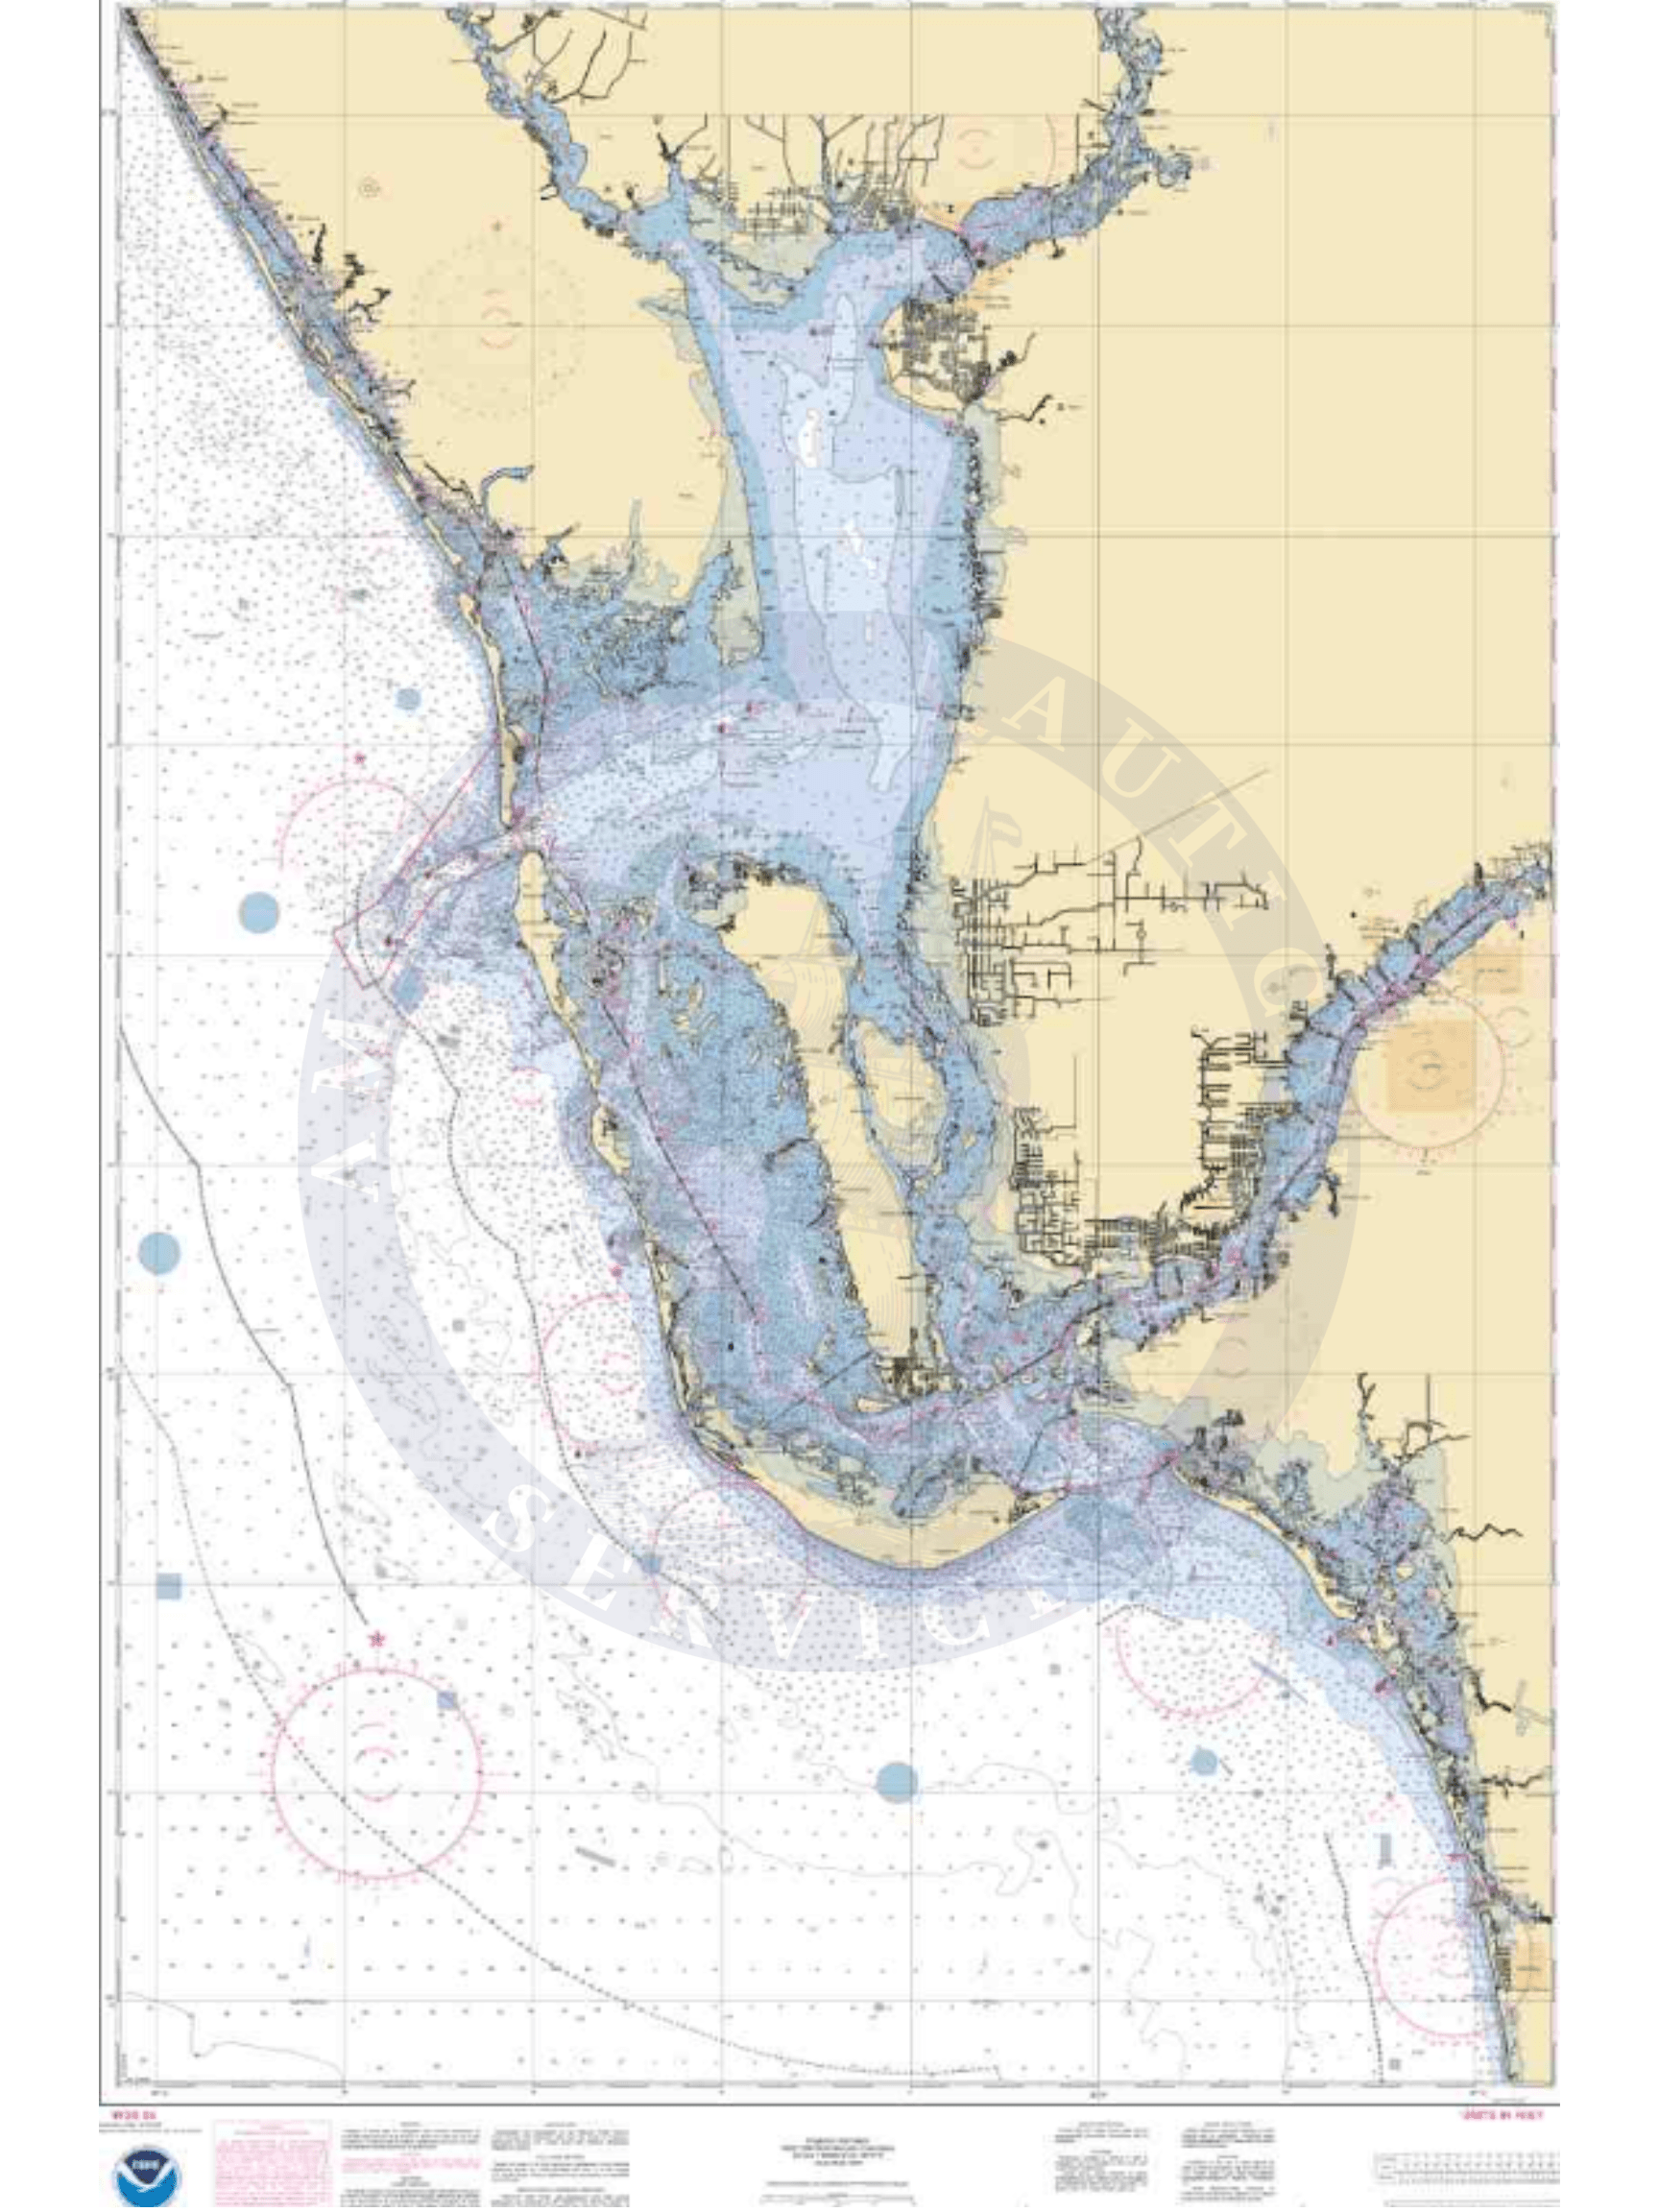 NOAA Nautical Chart 11426: Estero Bay to Lemon Bay, including Charlotte Harbor;Continuation of Peace River